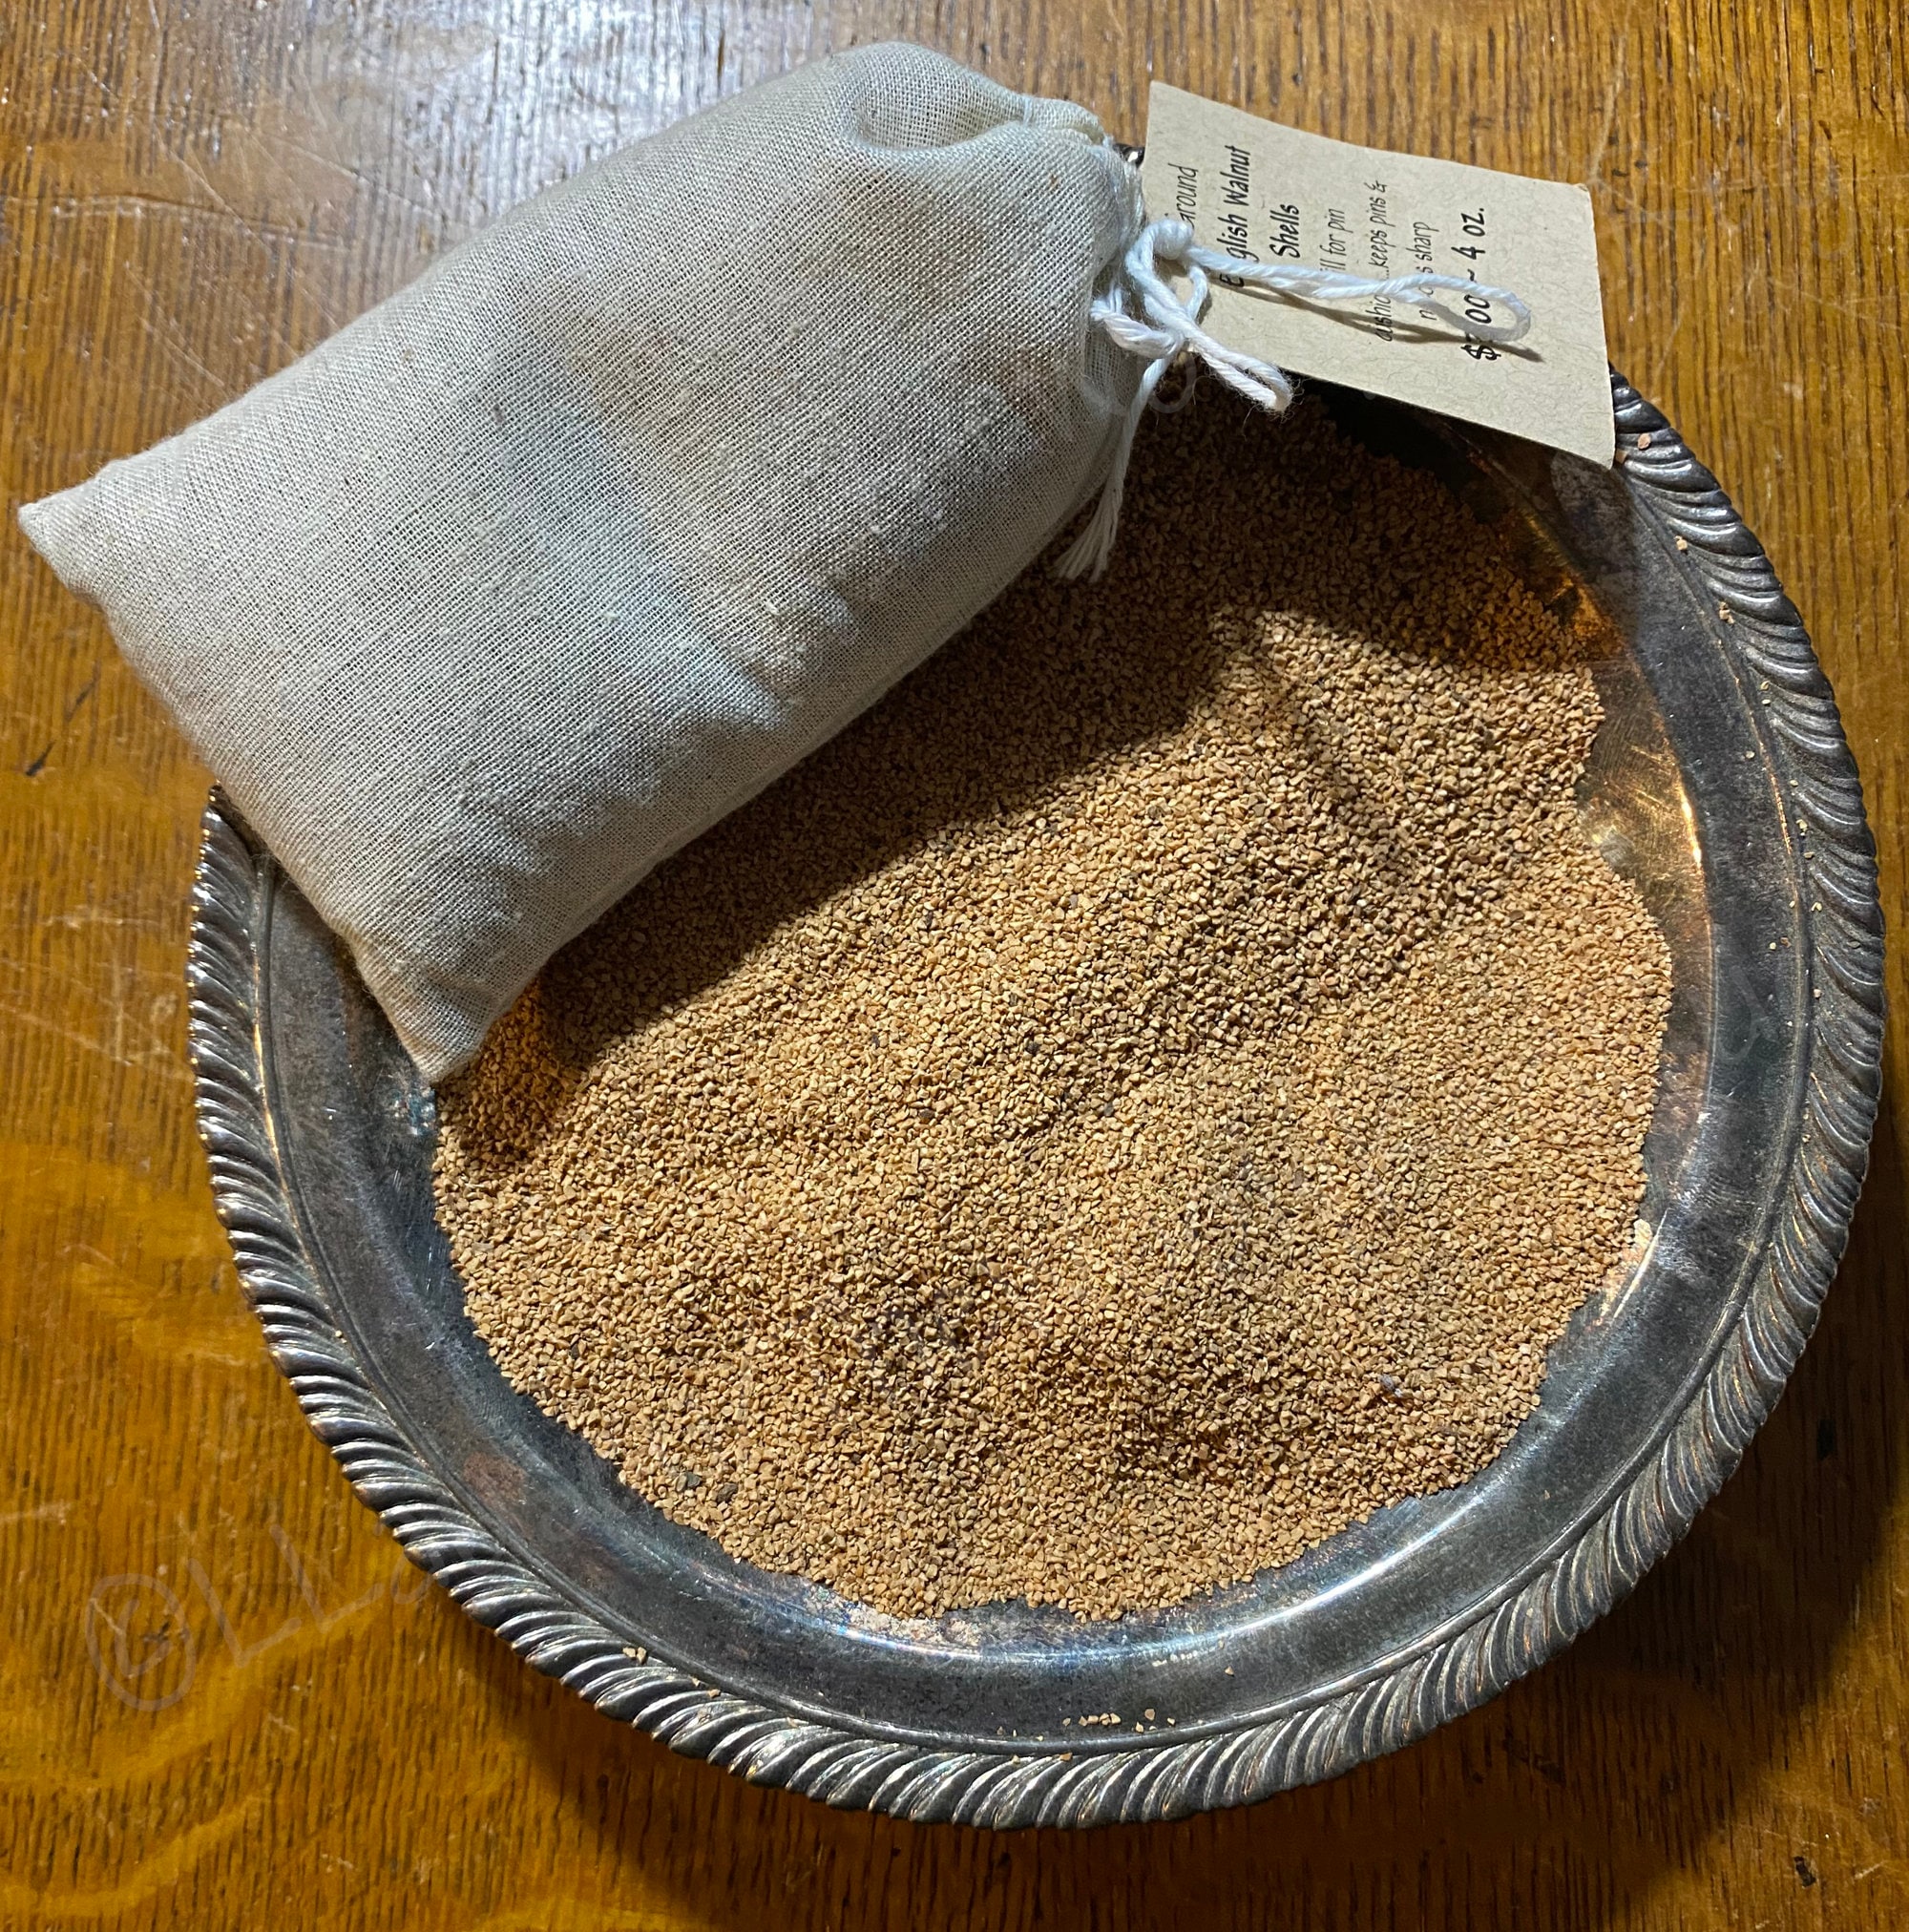 Crushed Walnut Shells: Filling for Pincushions: 50g Bag – Natasha